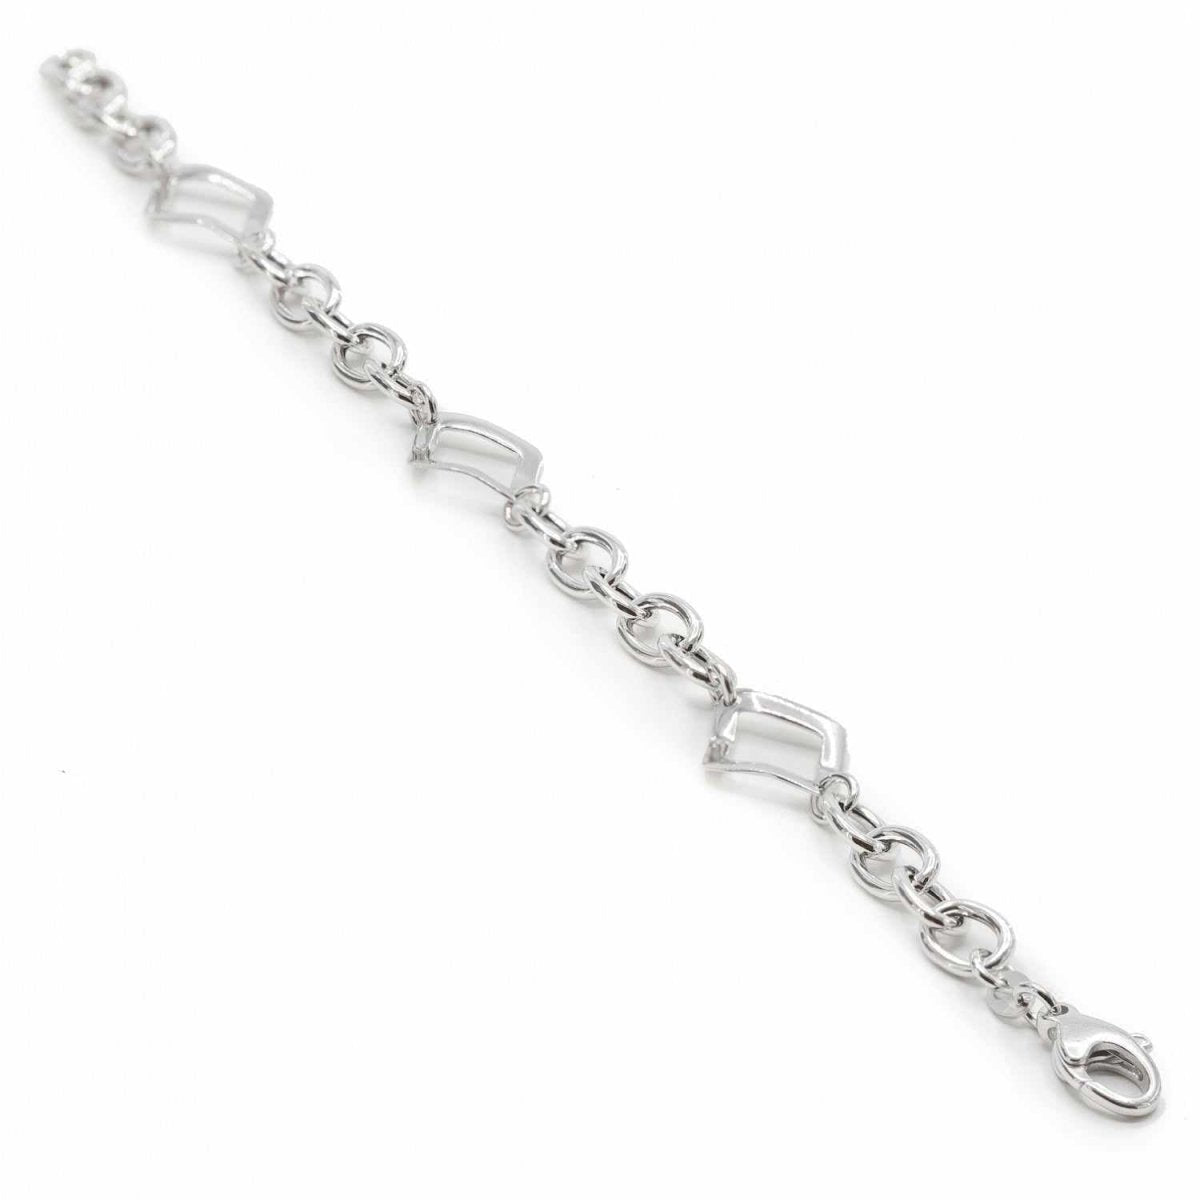 Bracelet - Bracelets silver link bracelets triple square motif design